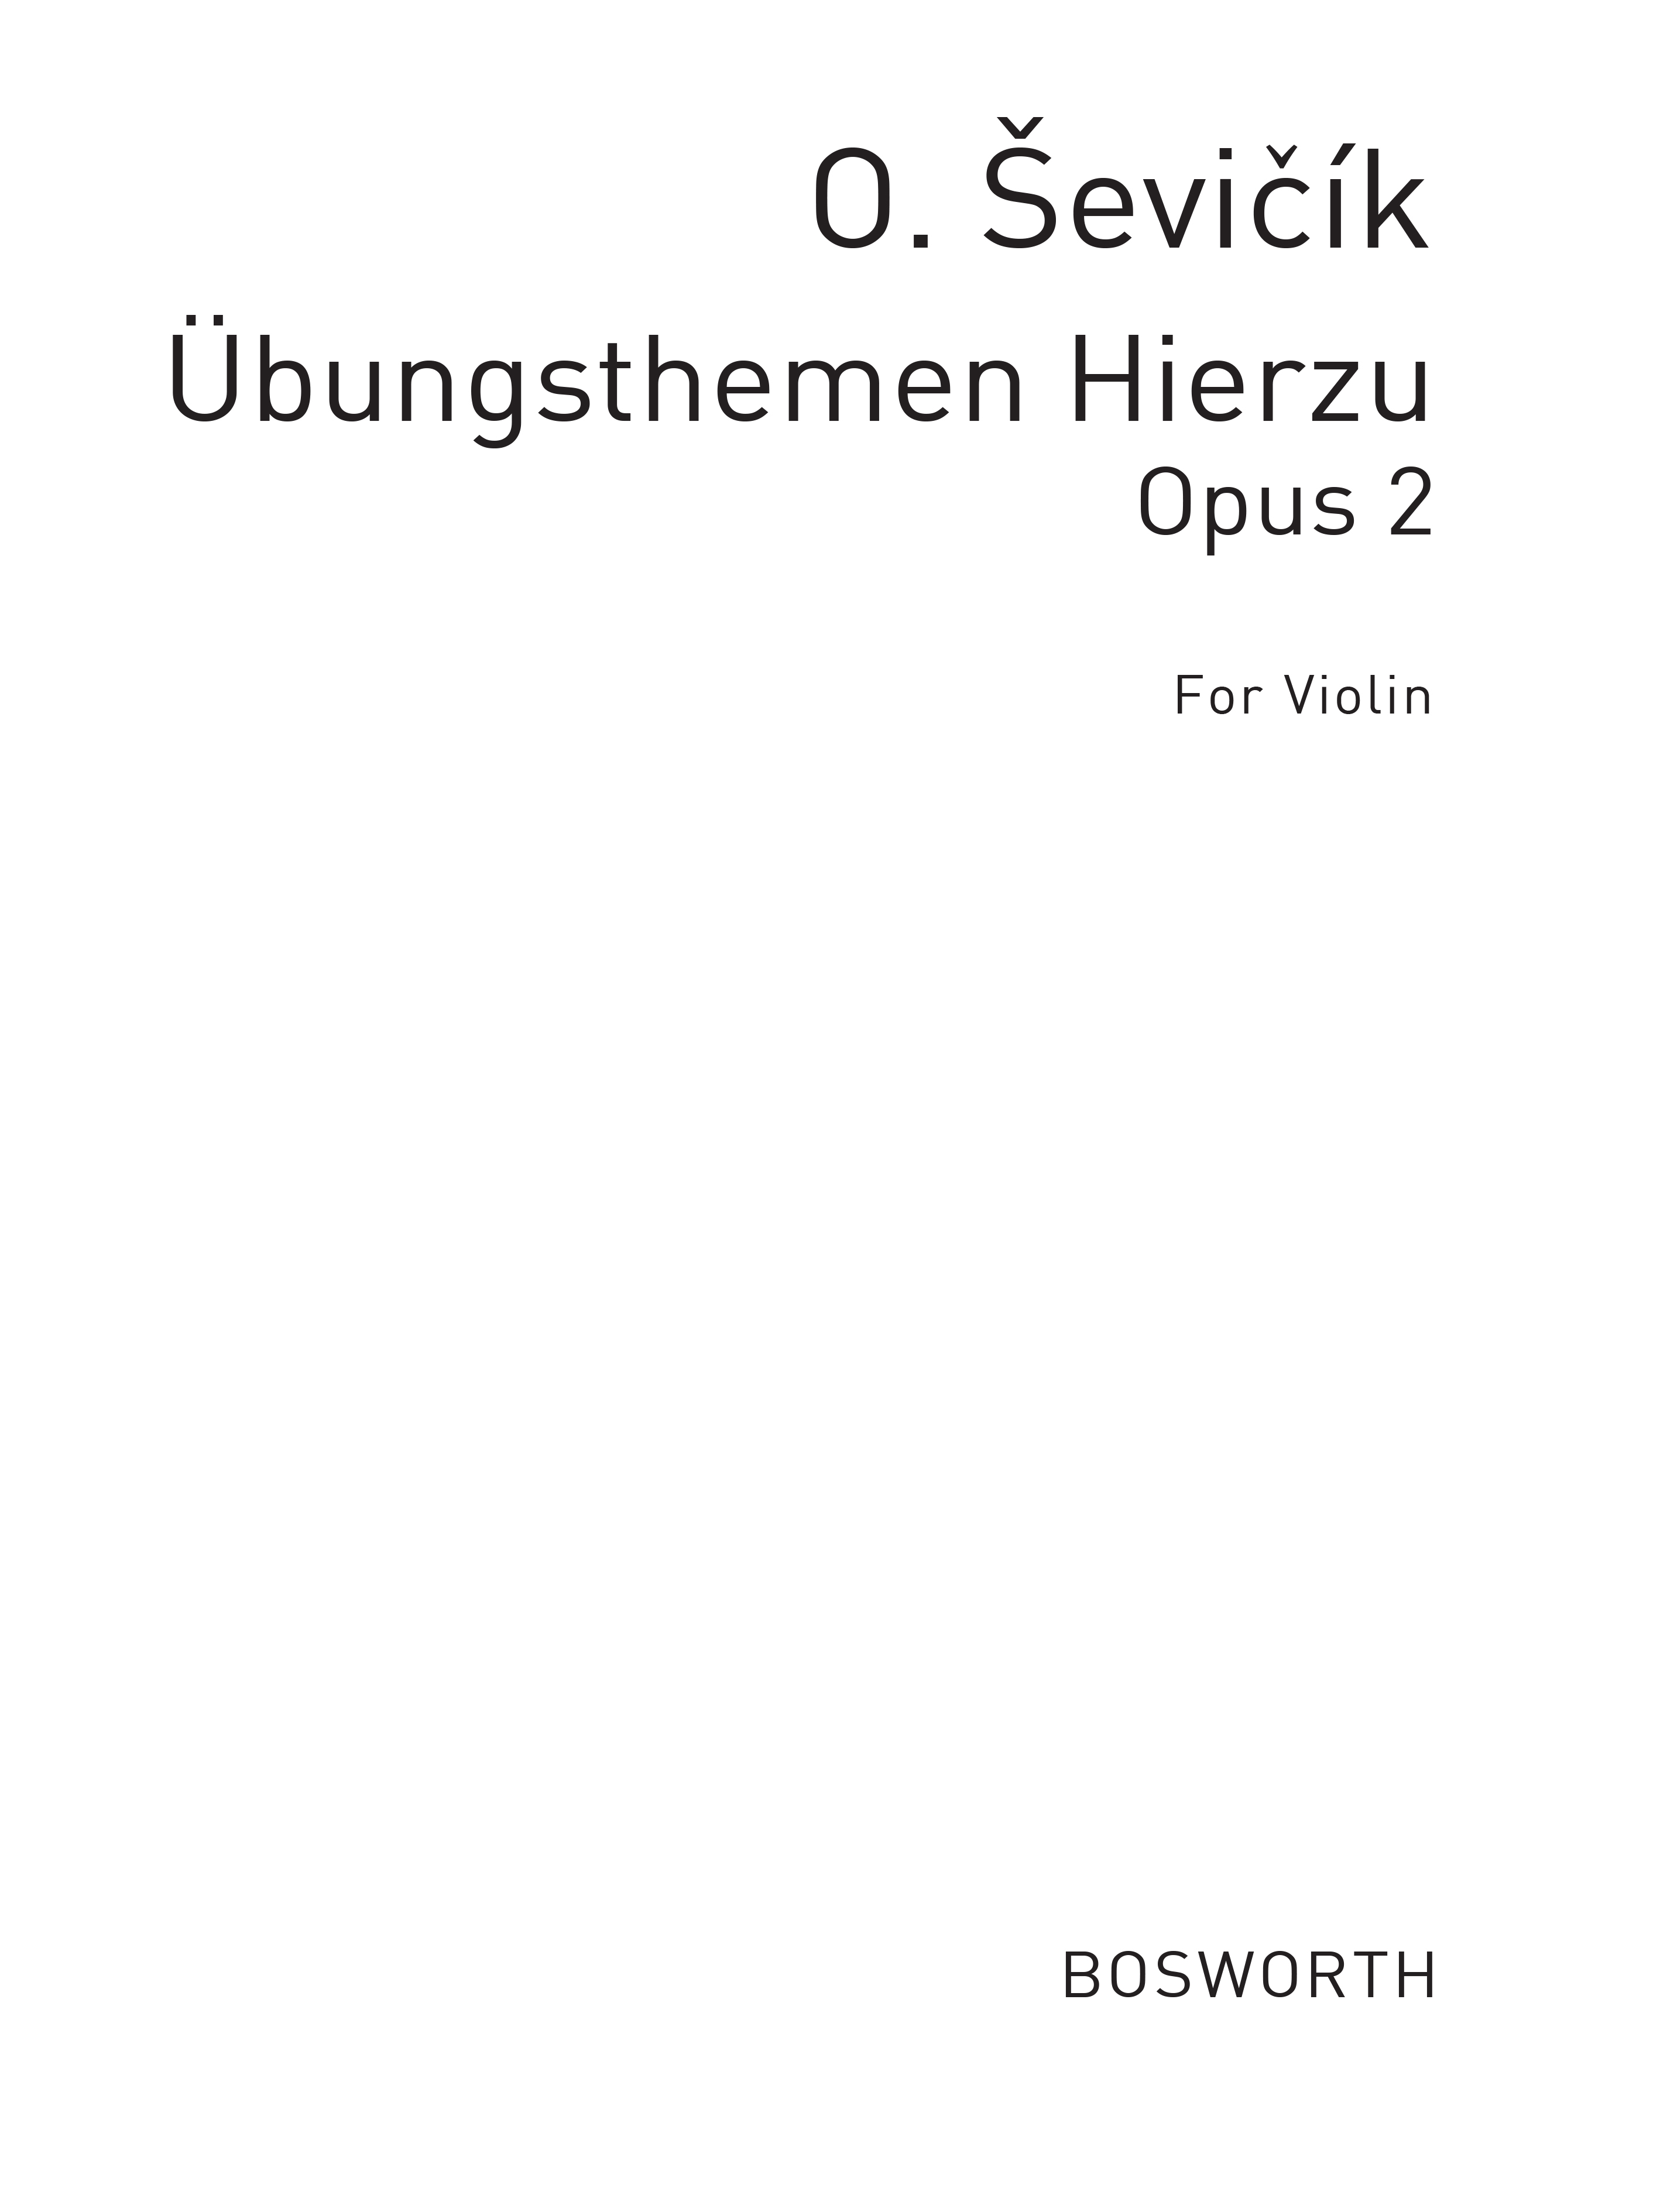 Otakar Sevcik: bungsthemen Hierzu Op. 2 for Violin: Violin: Study